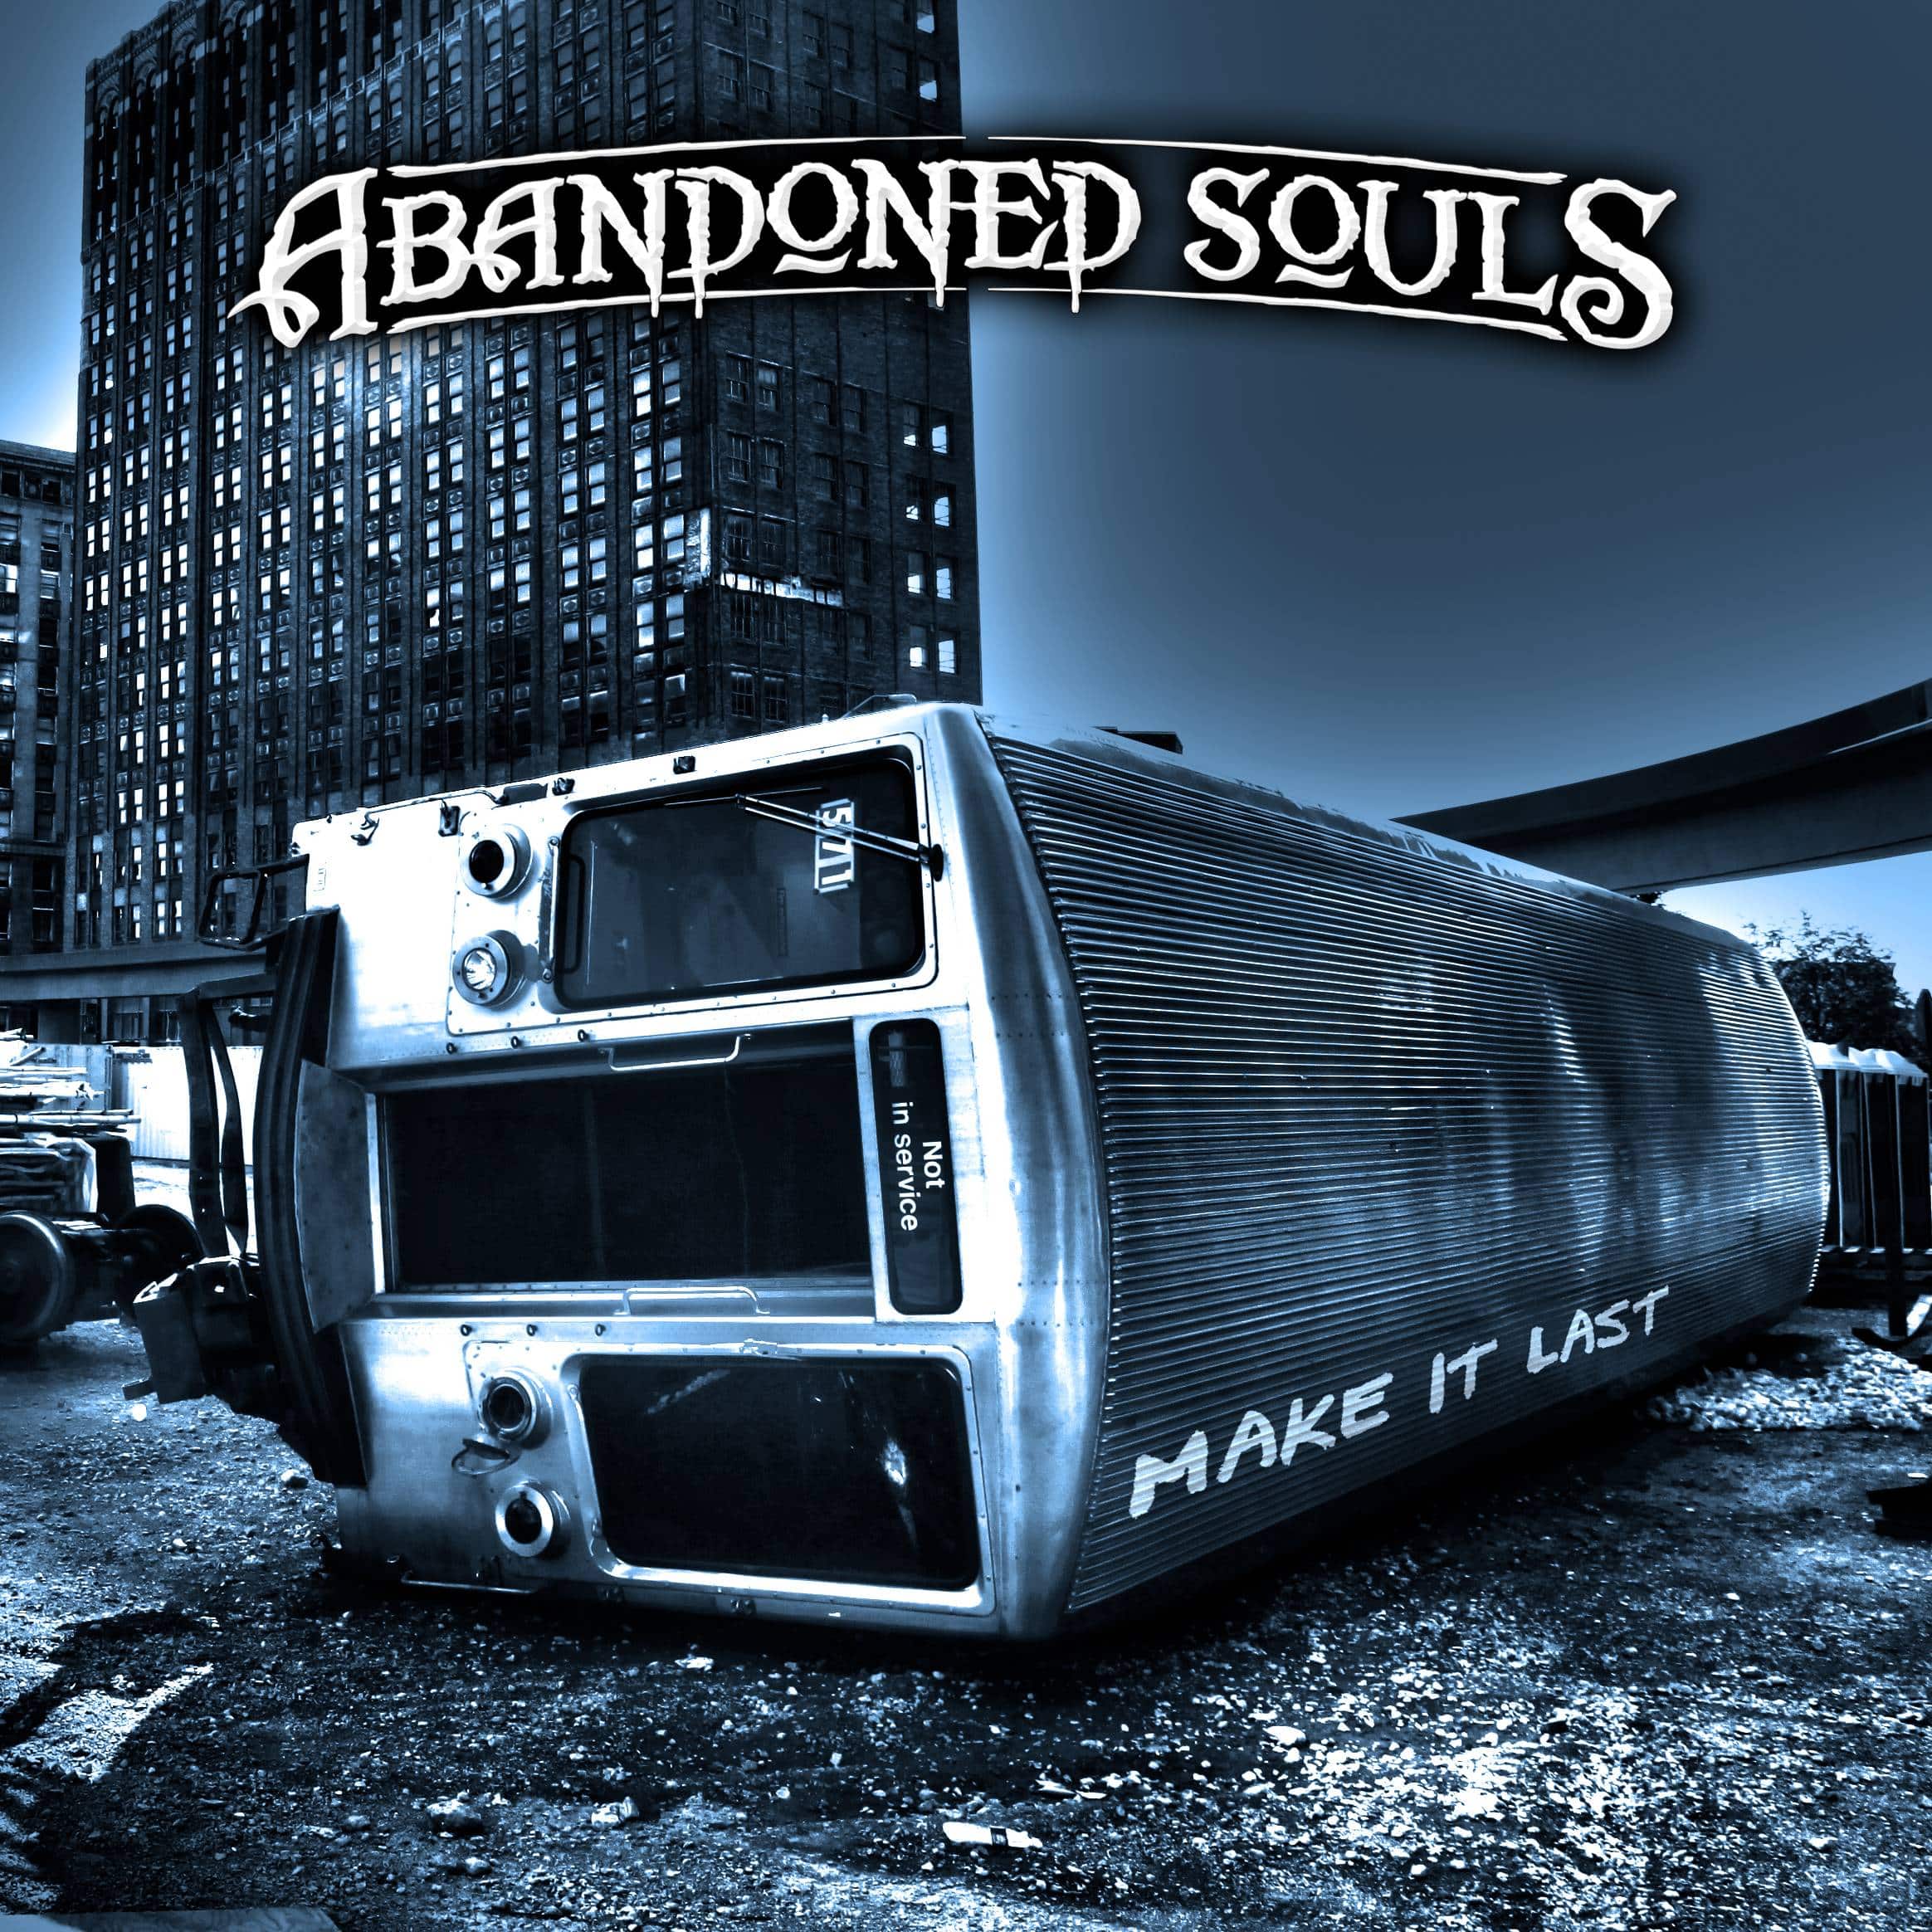 Abandoned Souls : ' Make It Last ' (EP) 29 April 2017 Fiend Records.